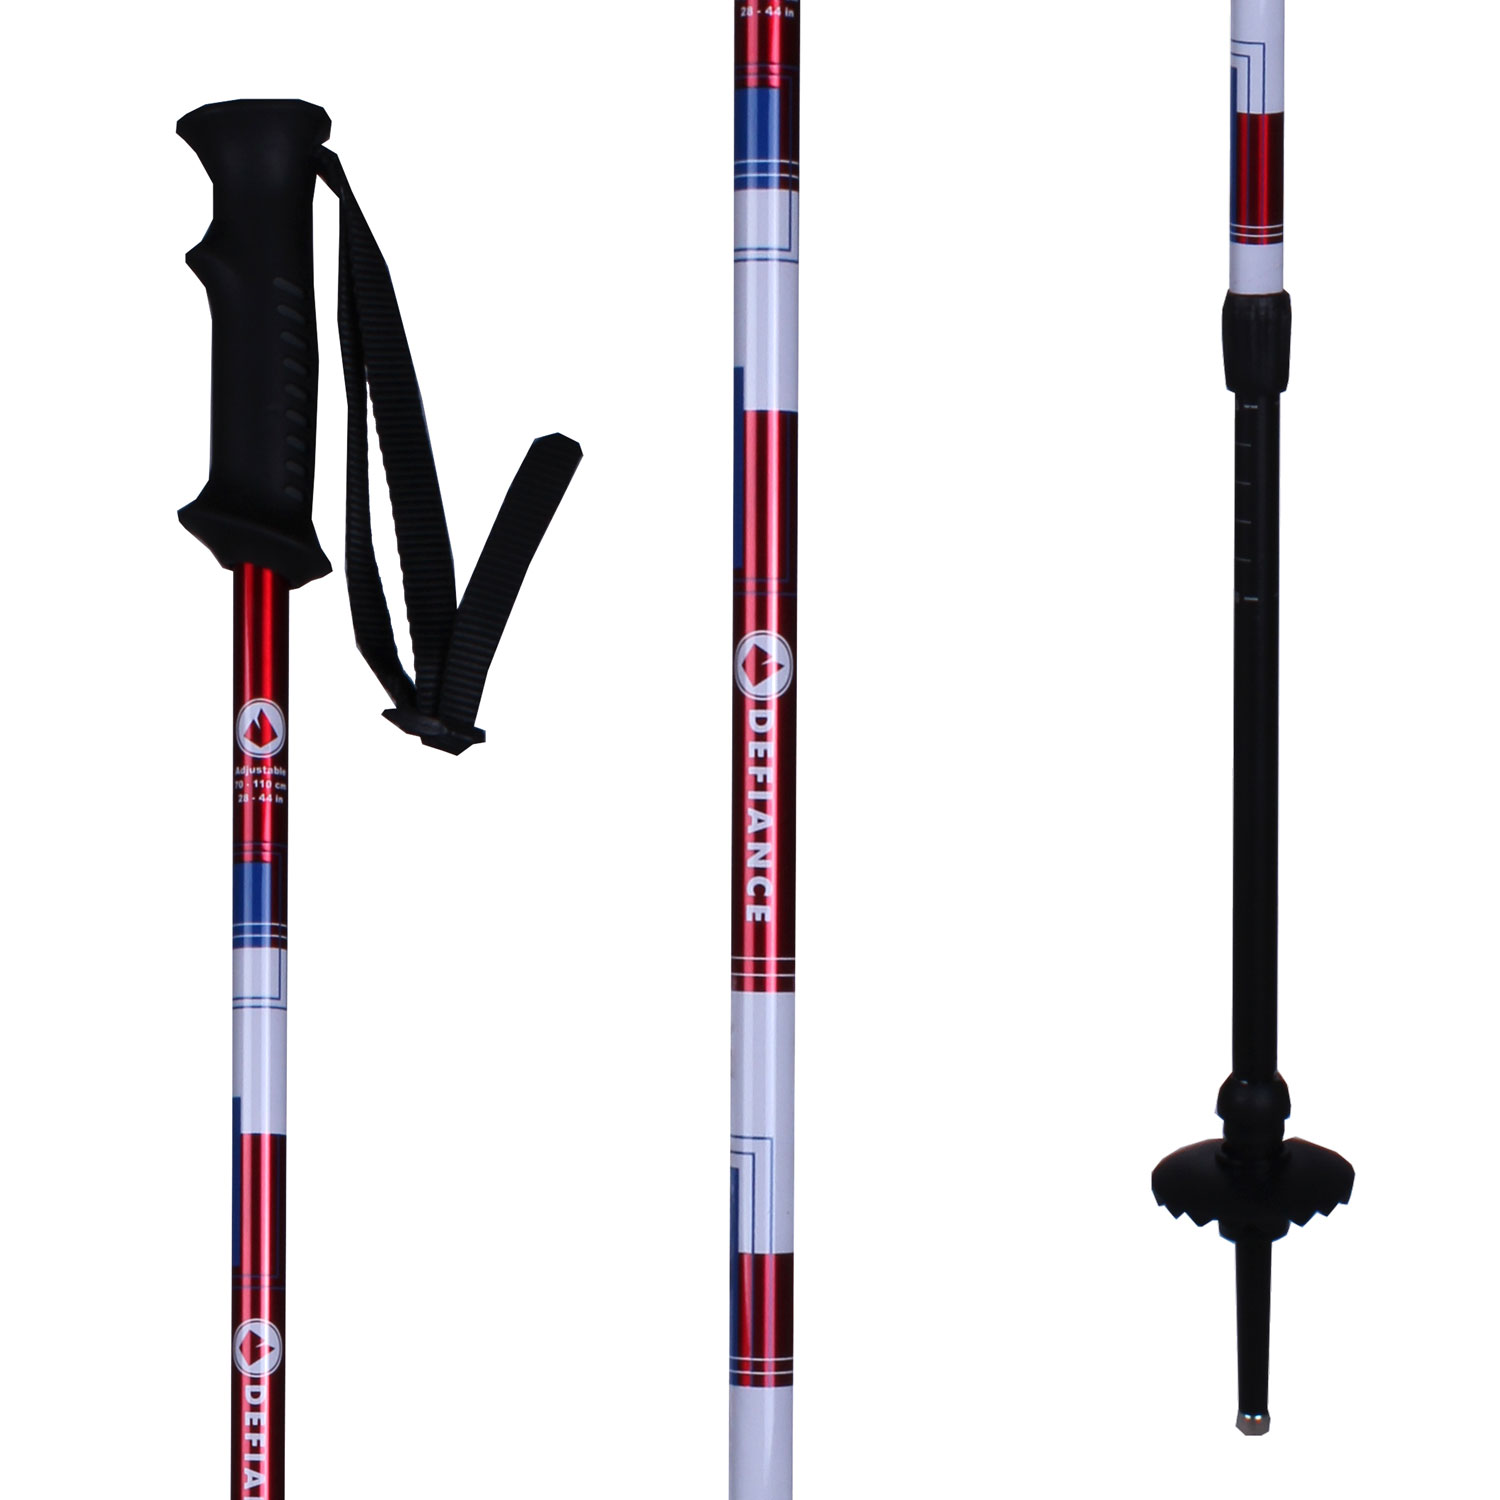 Defiance Junior Adjustable Ski Poles 2016 | eBay